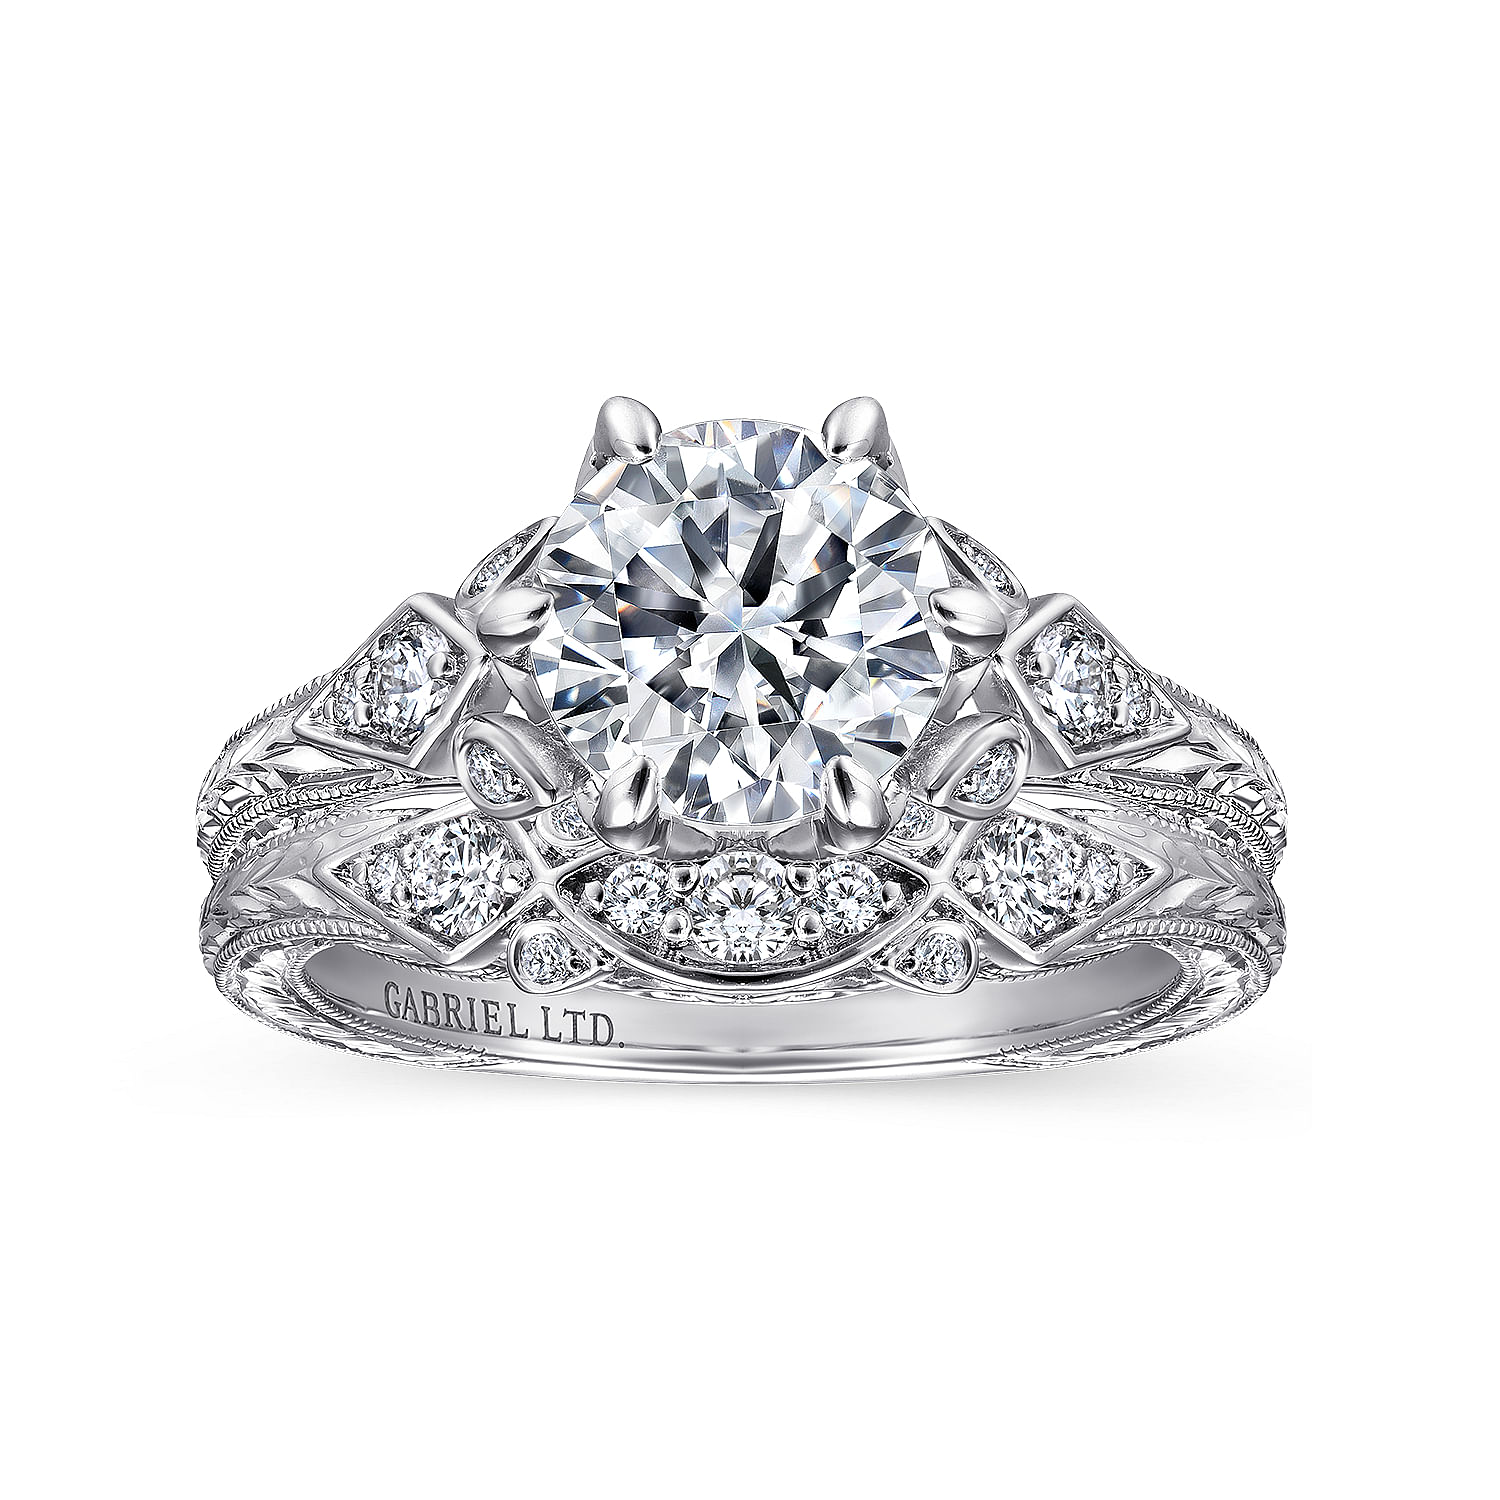 Karianne - Vintage Inspired 18K White Gold Round Diamond Channel Set Engagement Ring - 0.2 ct - Shot 4